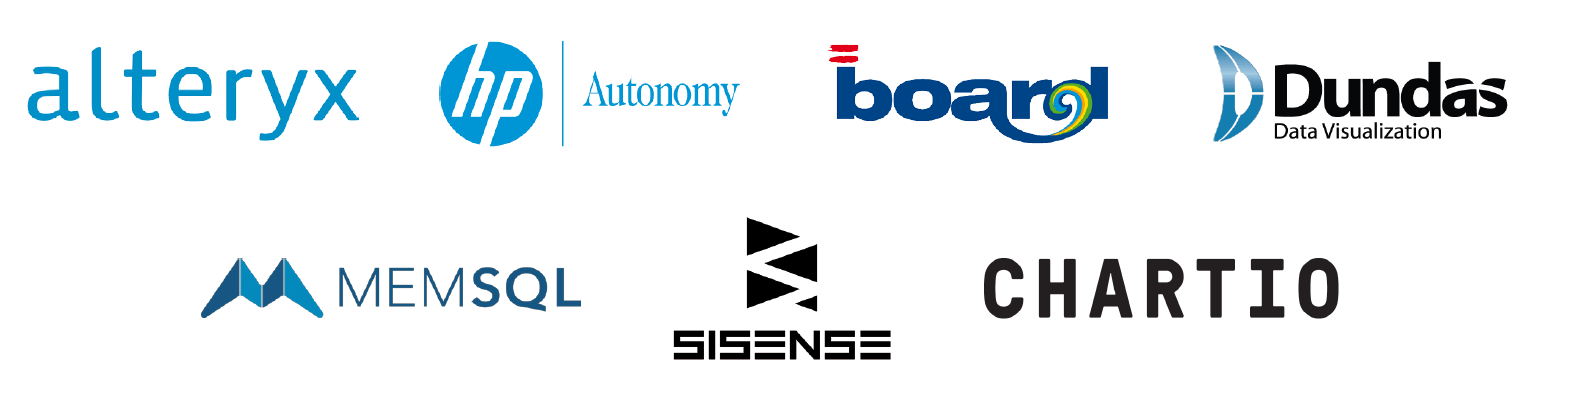 data quality software market-leaders logos from left to right. Alteryx, HP Autonomy, Board, Dundas Data Visualization, MEMSQL, Sisense, Chartio